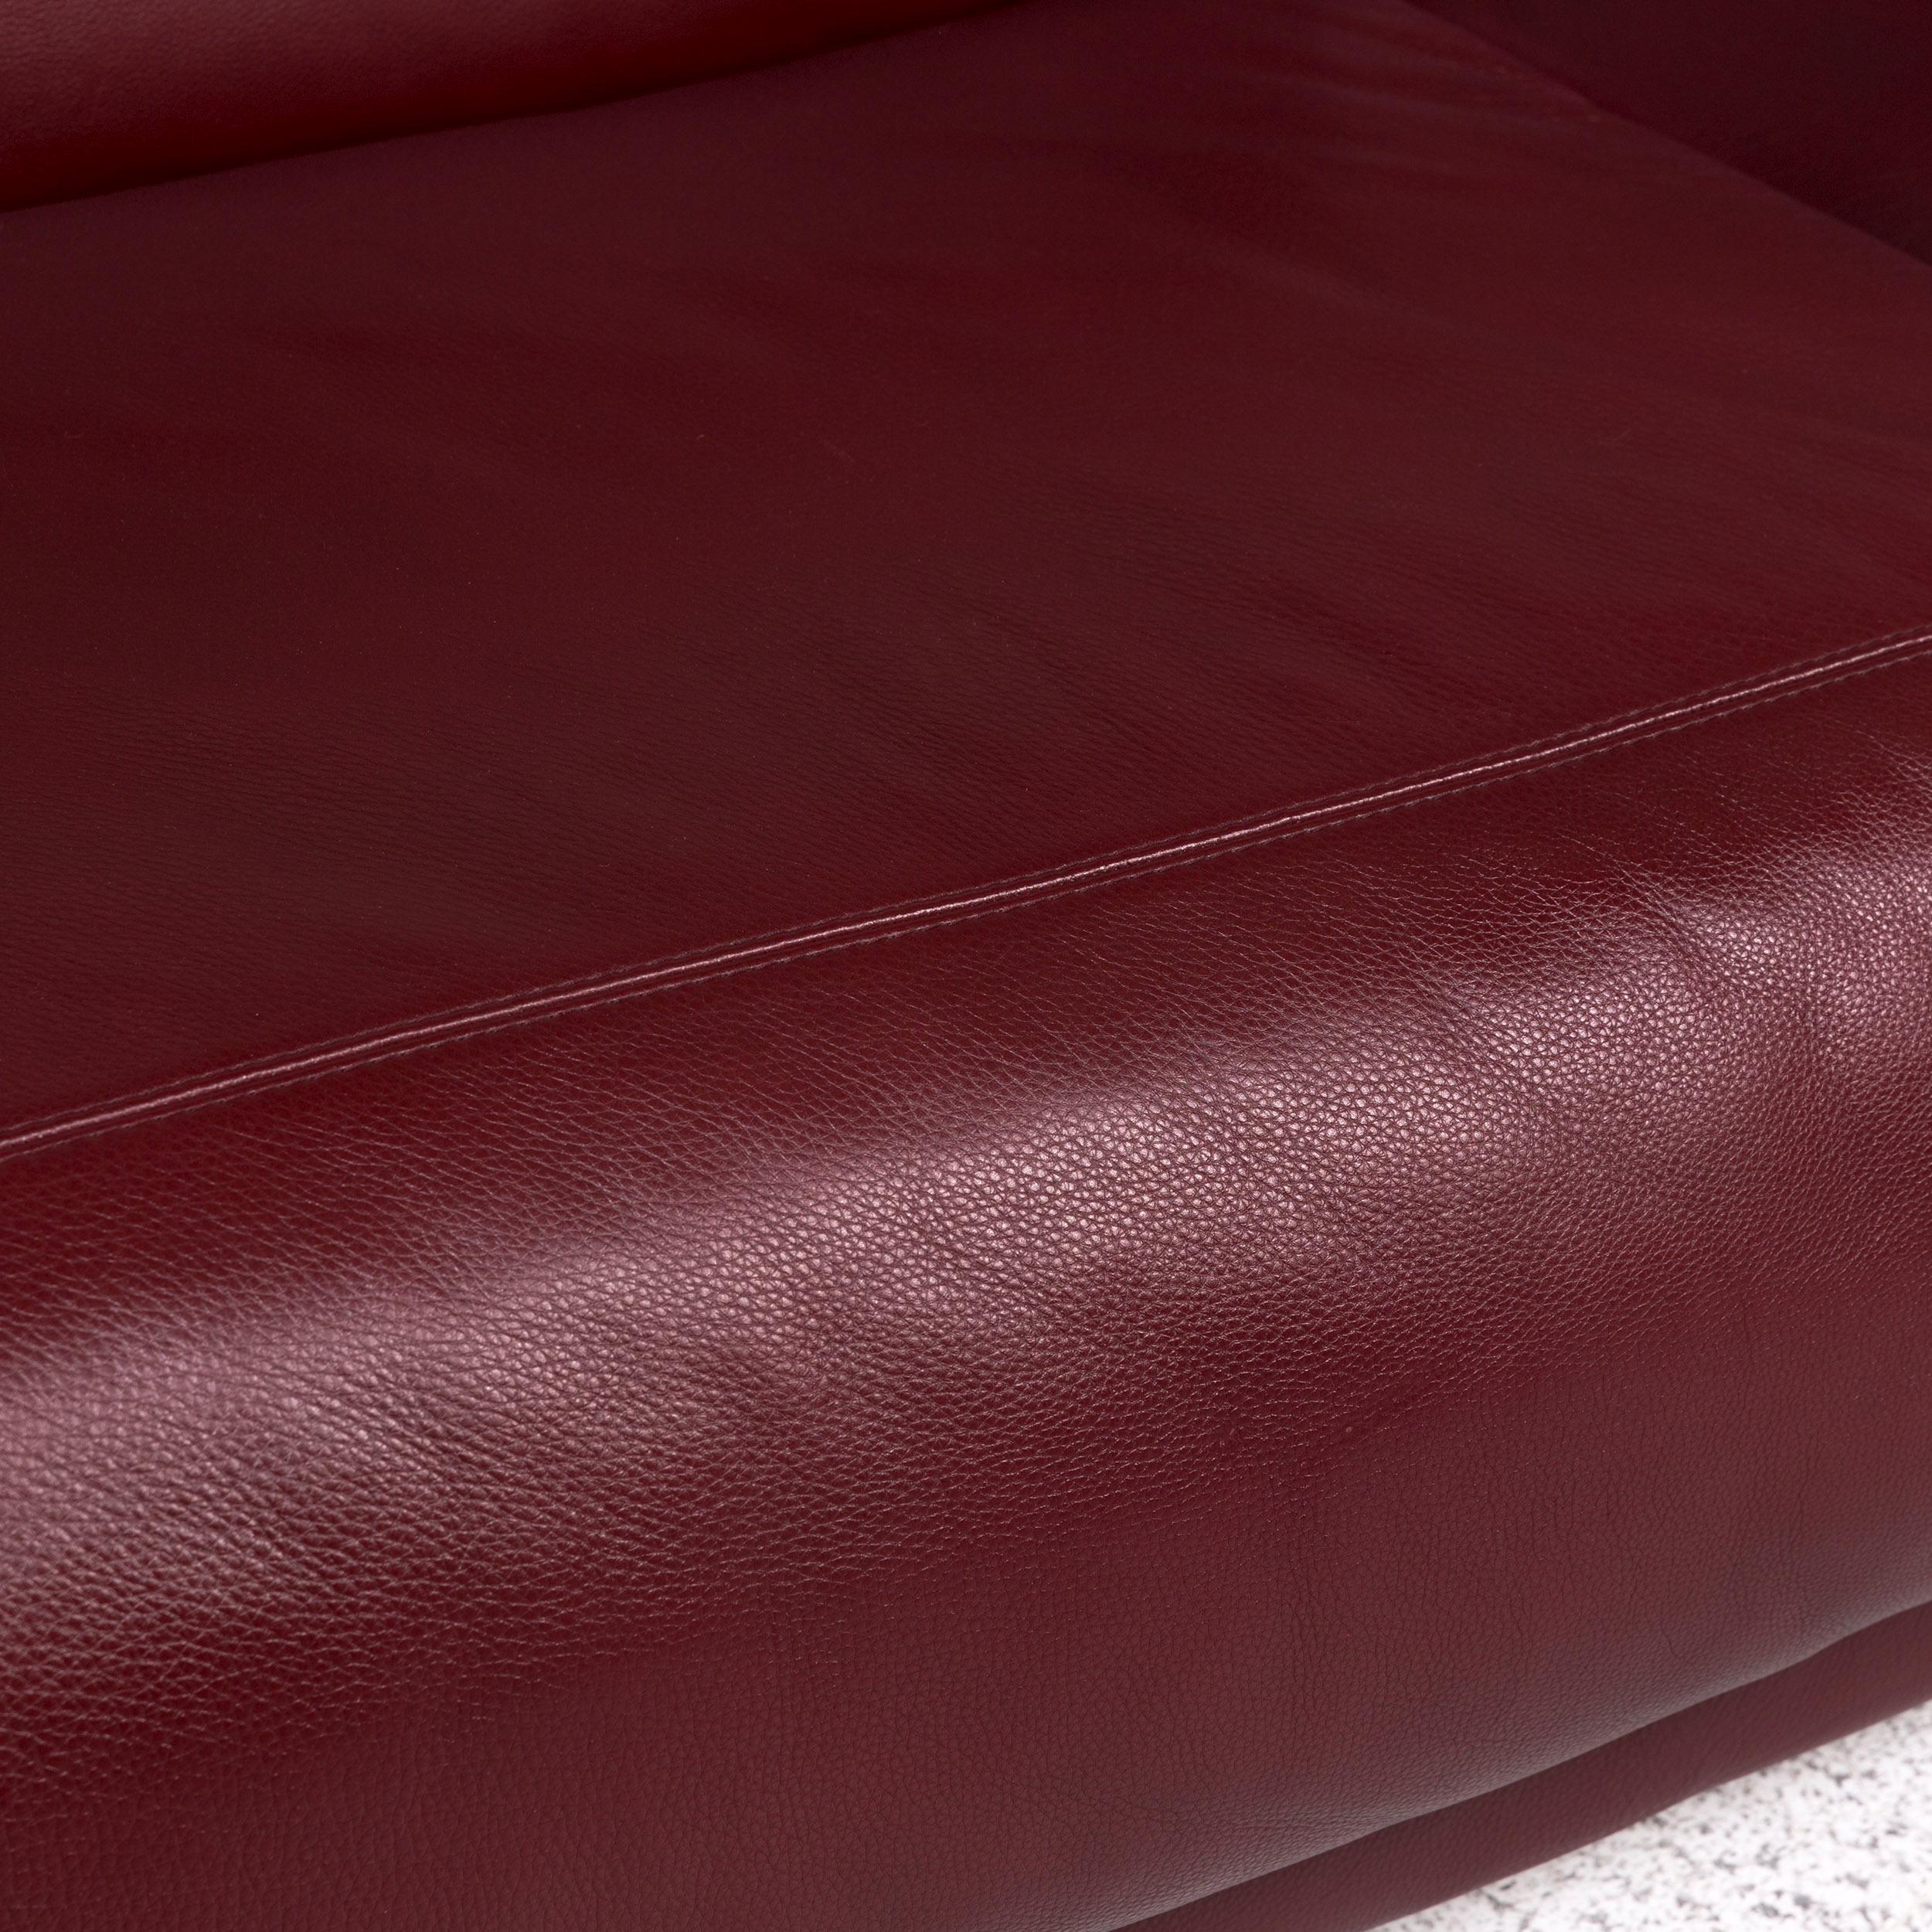 natuzzi red leather sofa